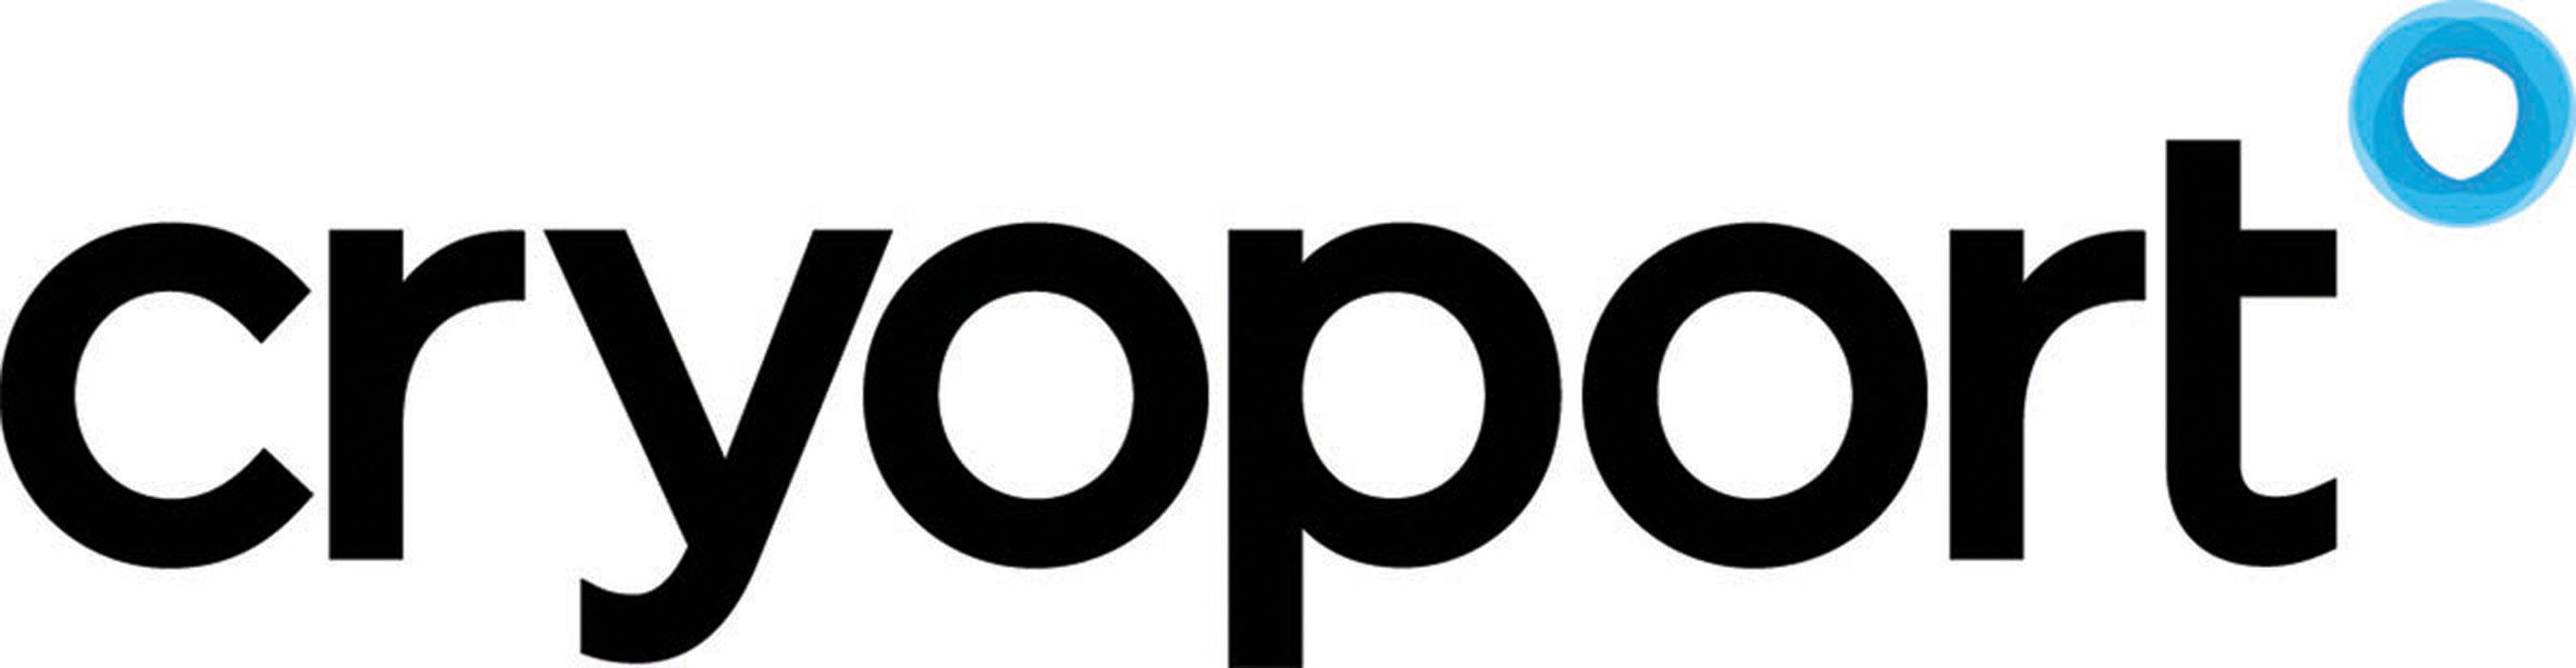 Cryoport, Inc. Logo. (PRNewsFoto/Cryoport, Inc.)